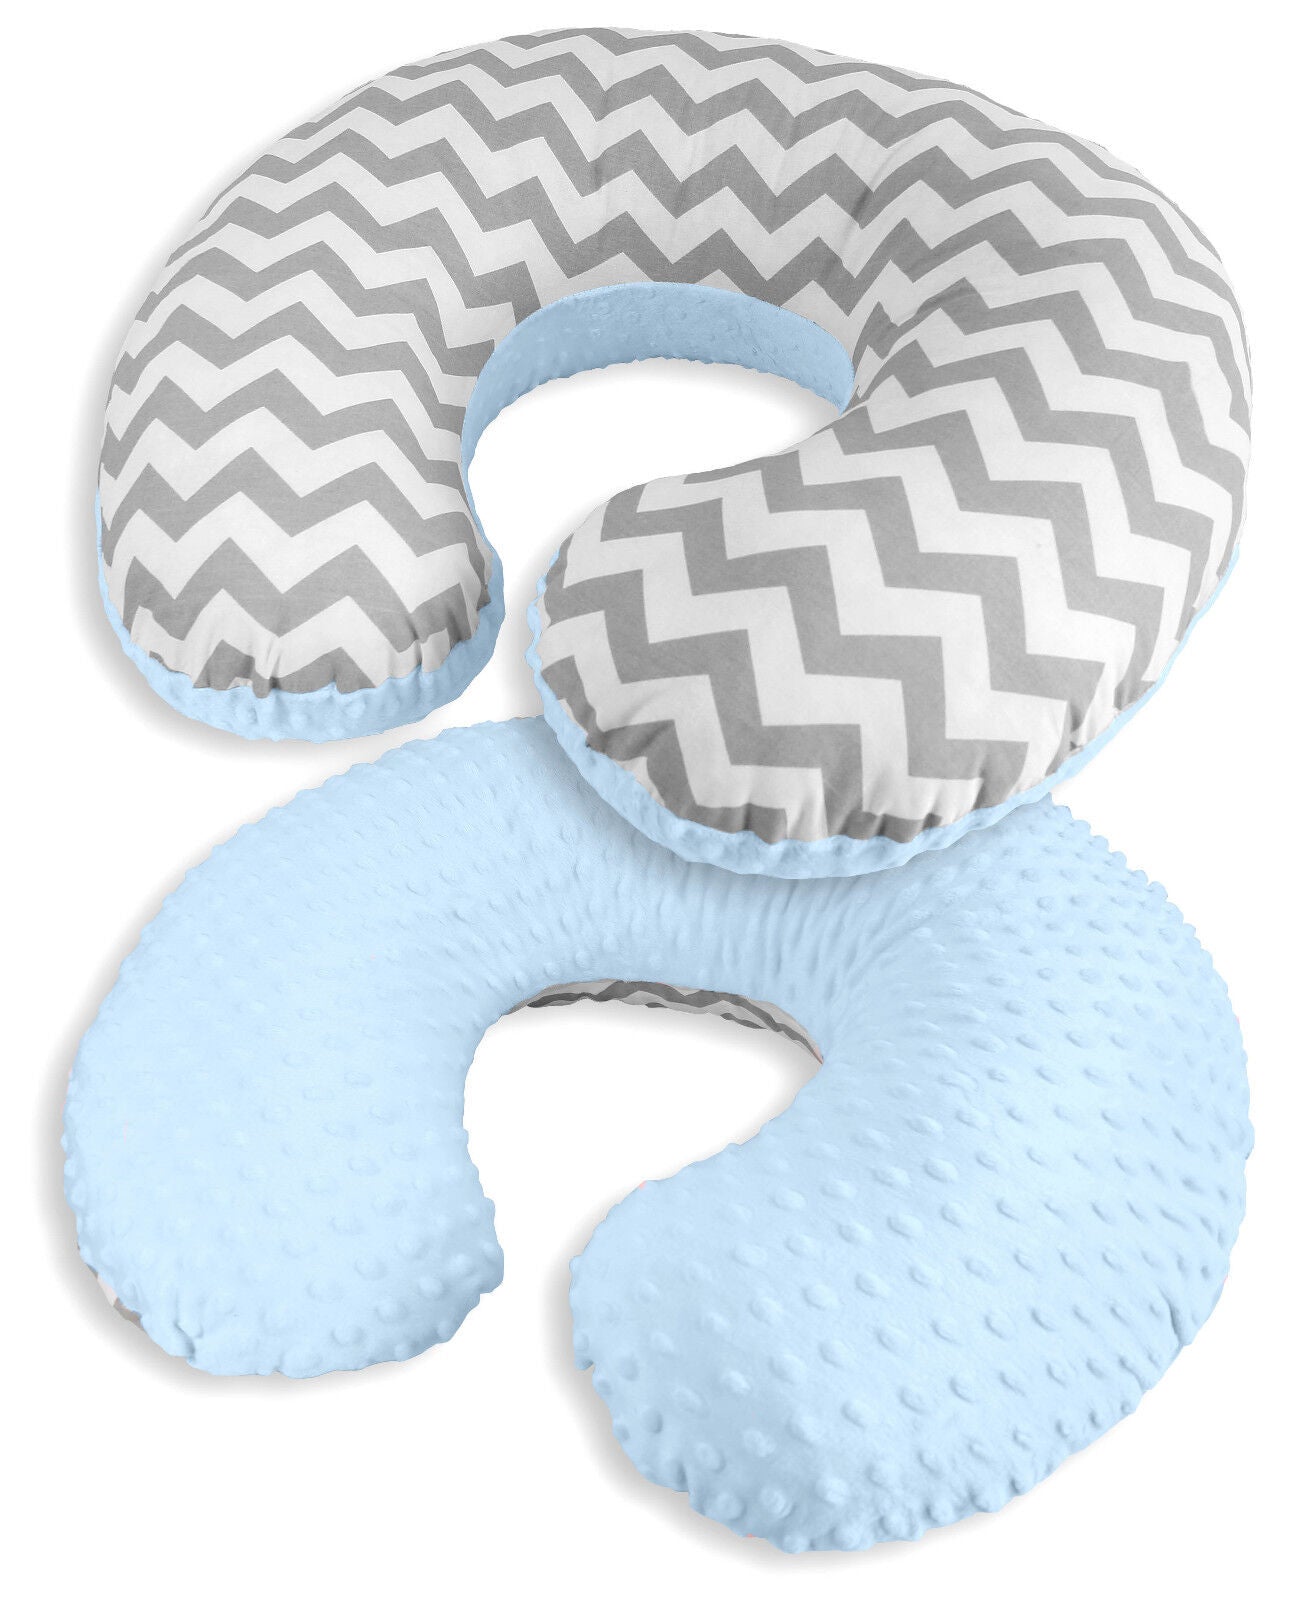 Baby Feeding Pillow Dimple Nursing Breastfeeding Pregnancy Pillow+Cover Blue/ zig zag